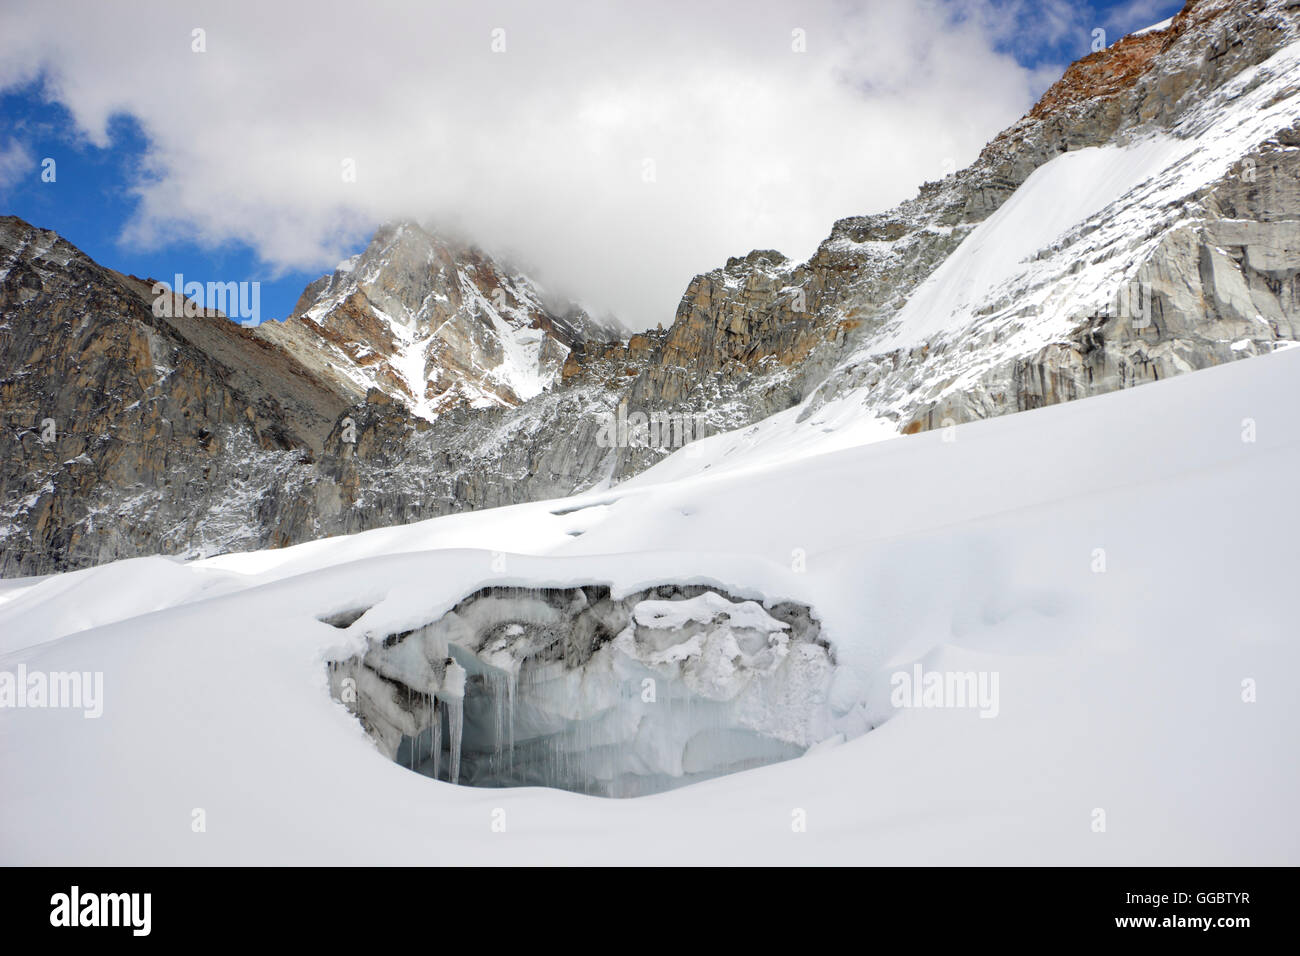 Crevice in snow on route to Mera peak high camp - Mera La Stock Photo